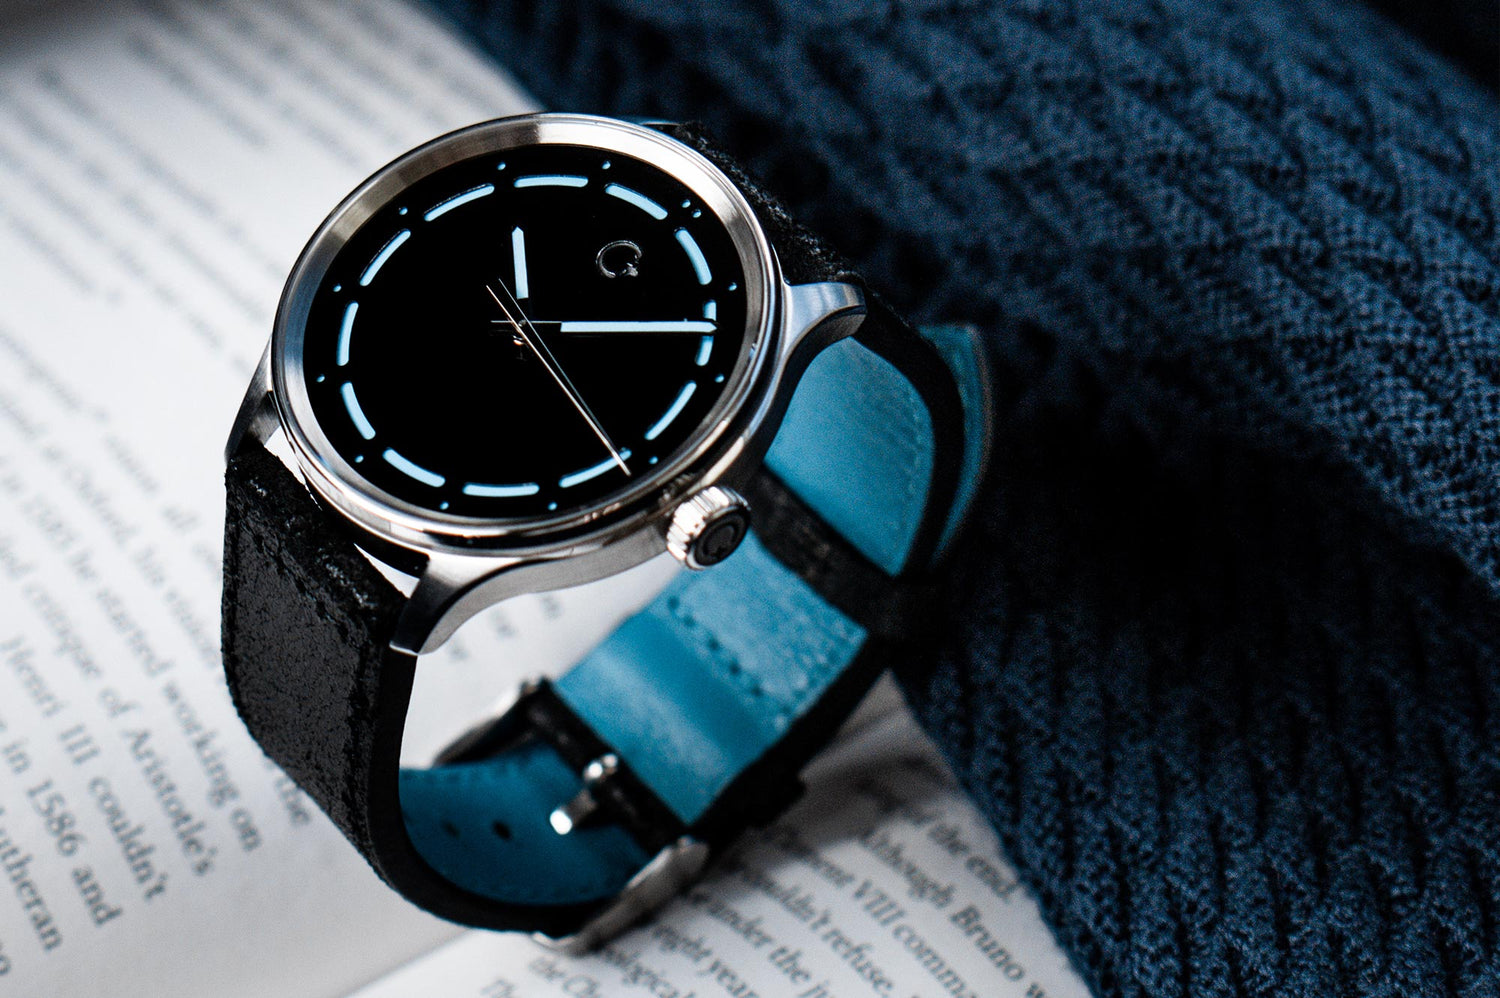 Chronotechna NanoBlack watch, 42mm, swiss made, sandwich dial, Aerospace Super black watch face